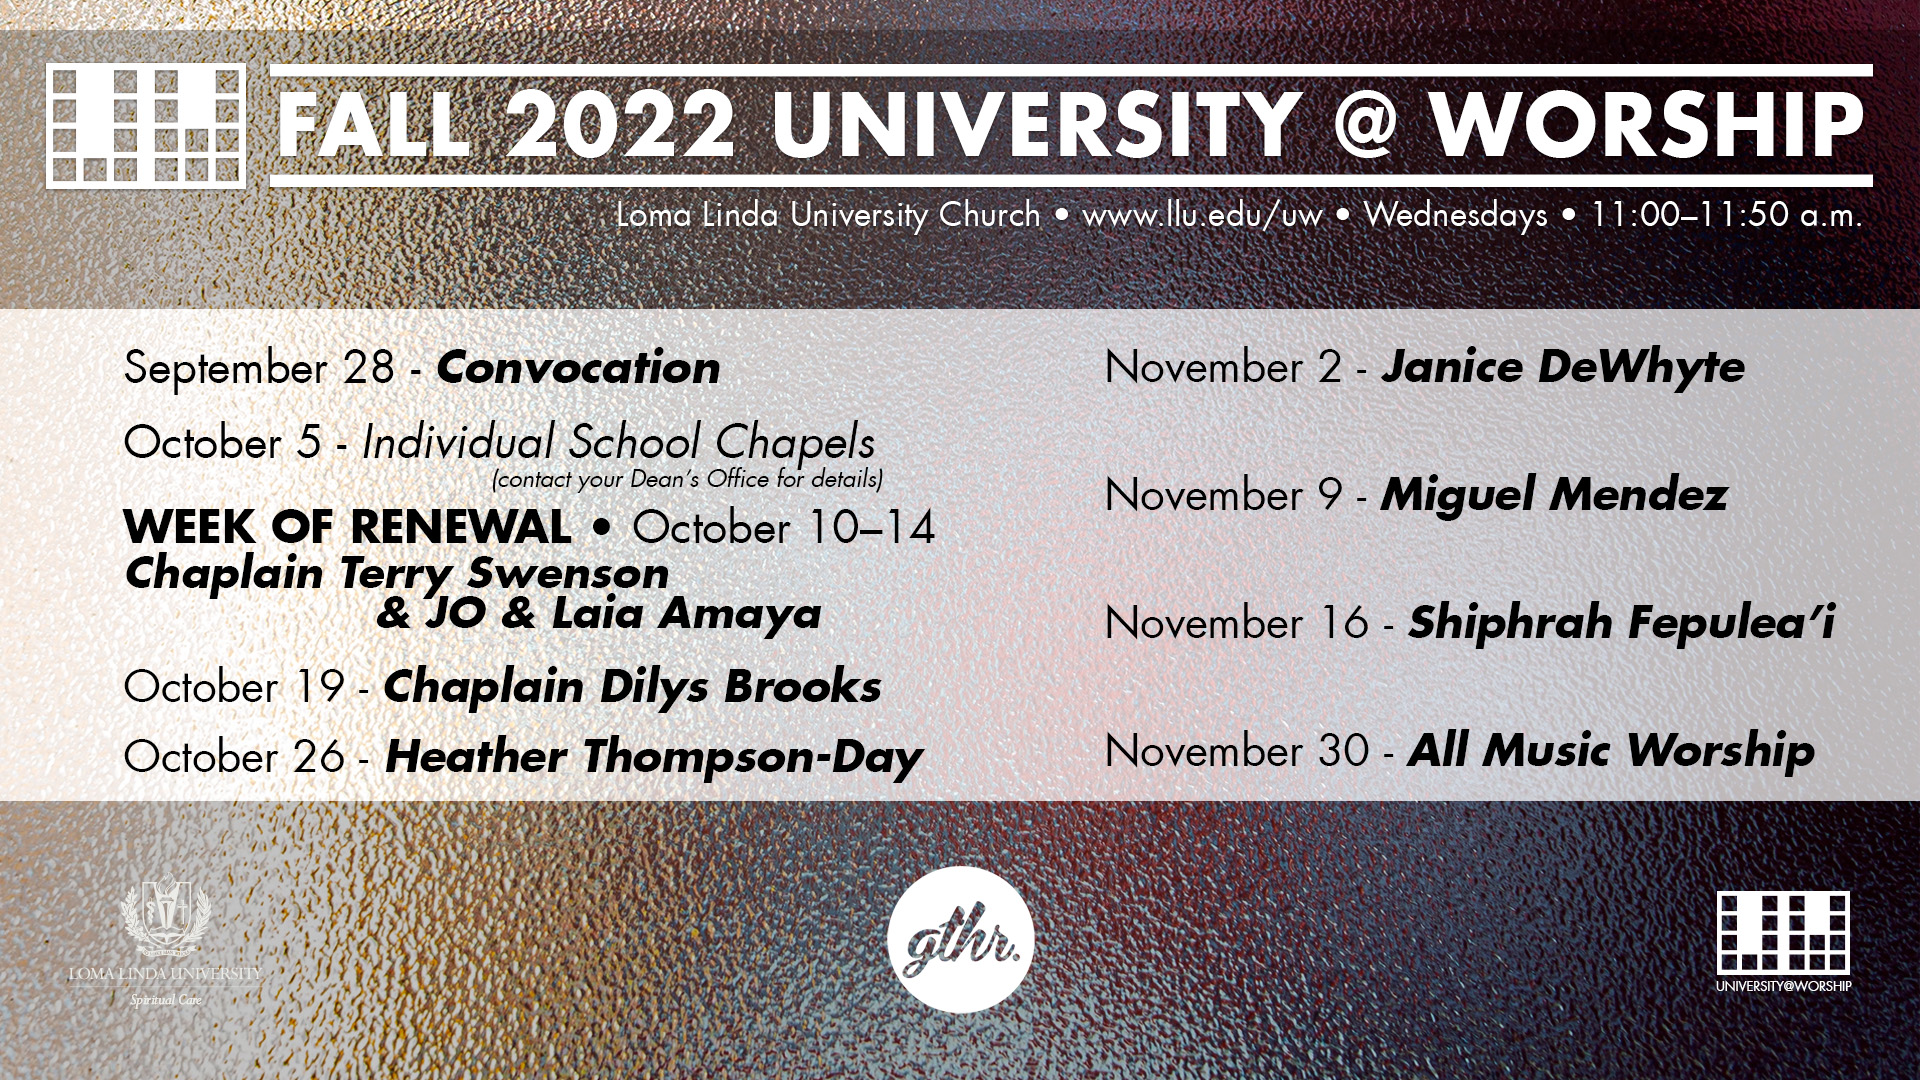 Fall University@Worship Dates